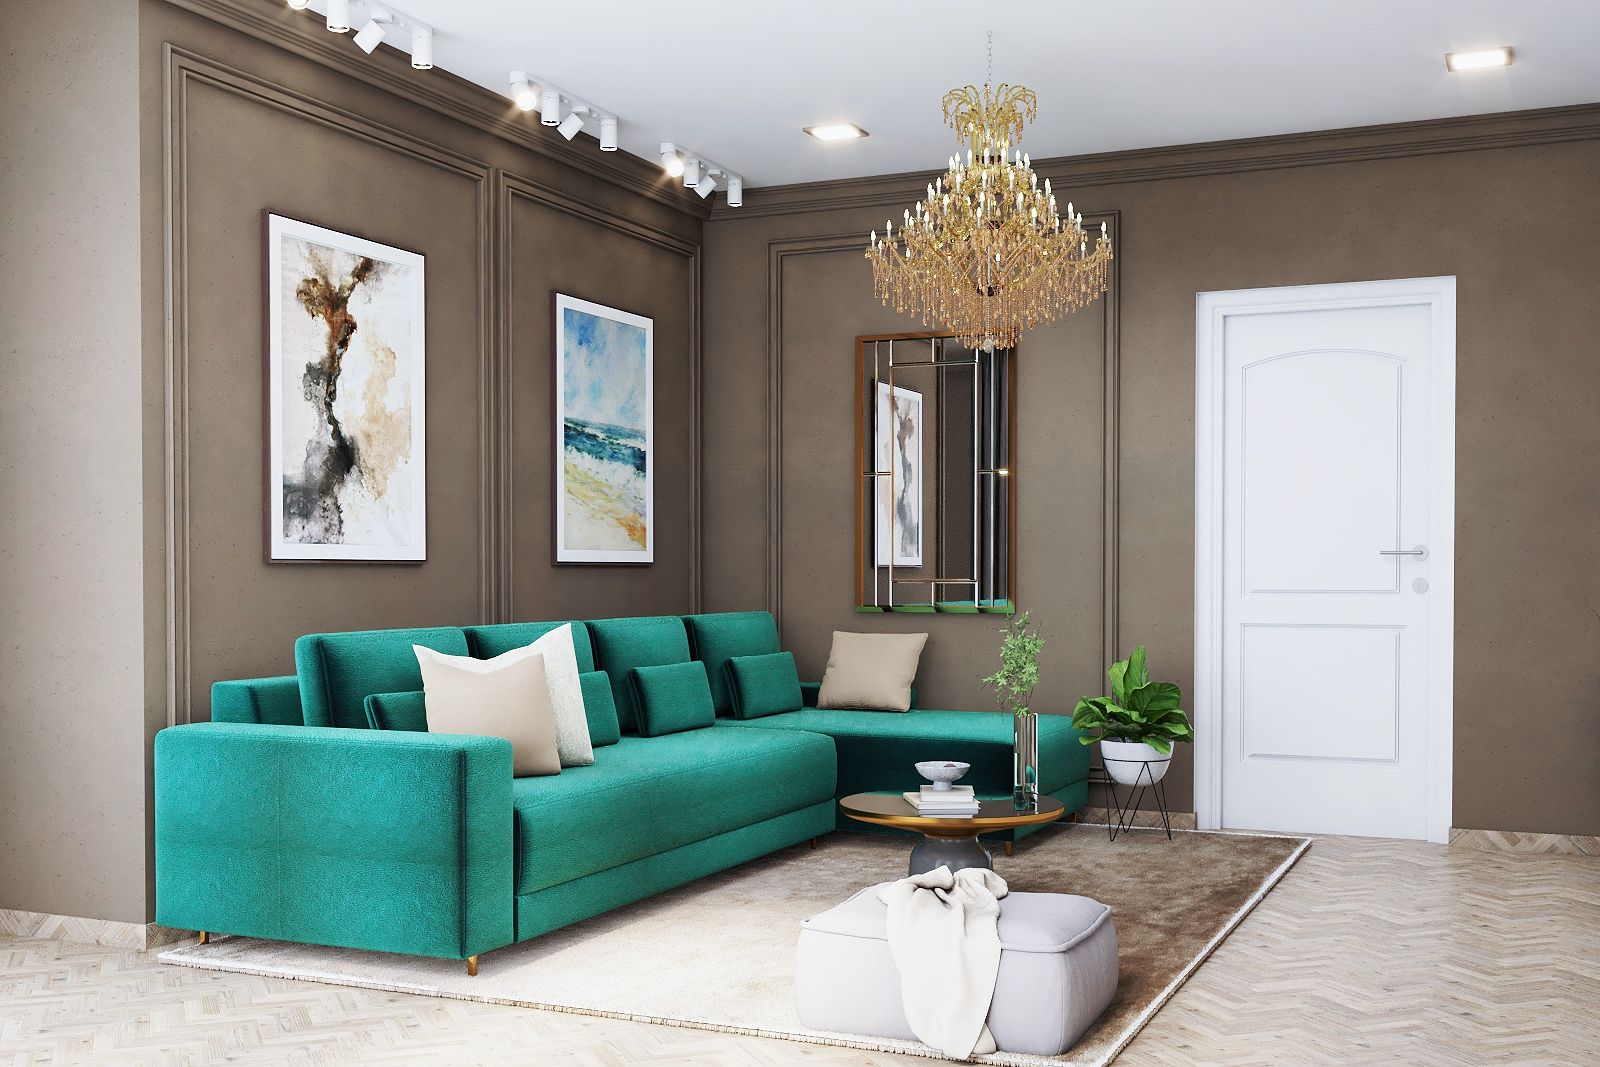 Spacious Living Room Design With Wooden Chevron Flooring | Livspace